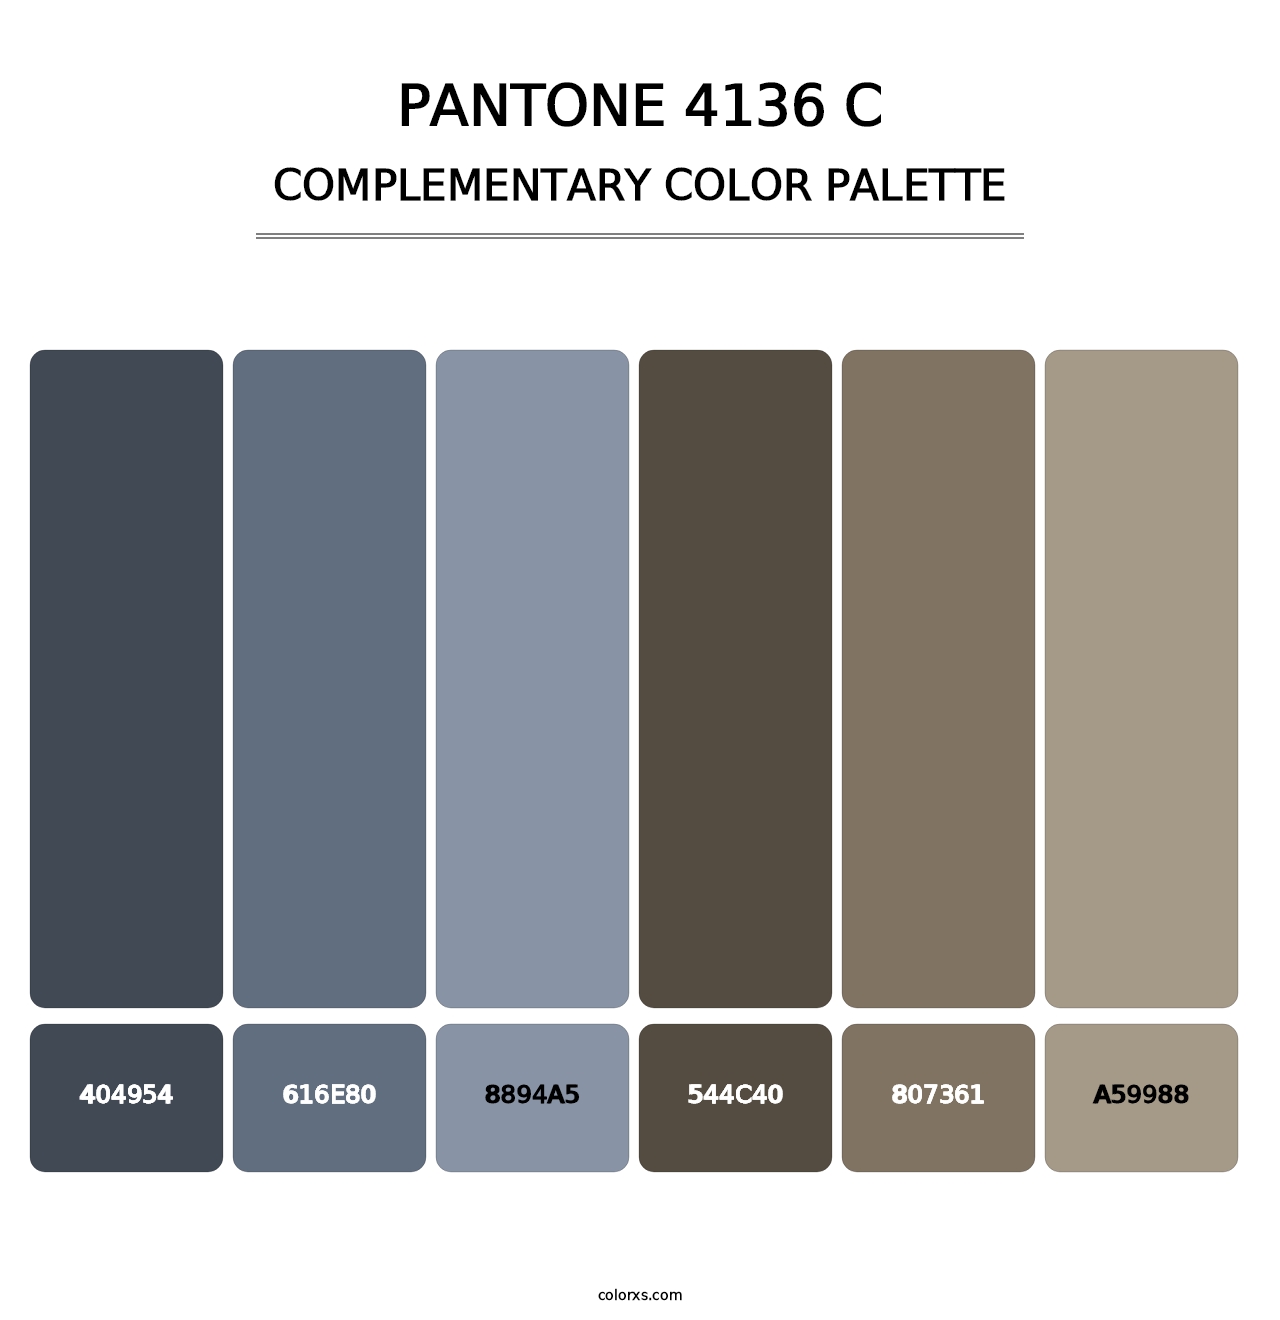 PANTONE 4136 C - Complementary Color Palette